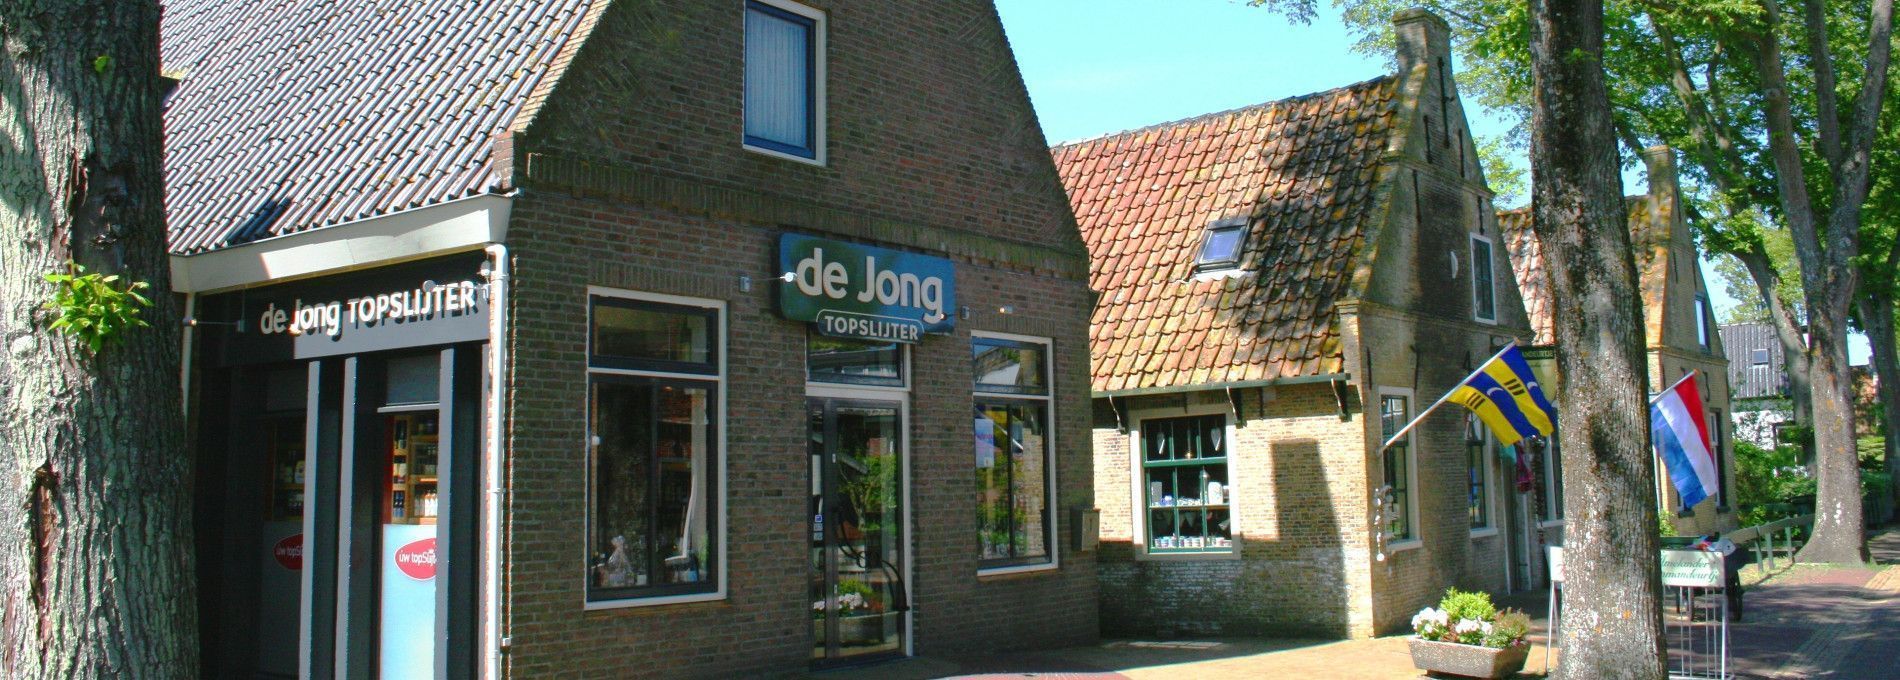 TopSlijter De Jong - VVV Ameland